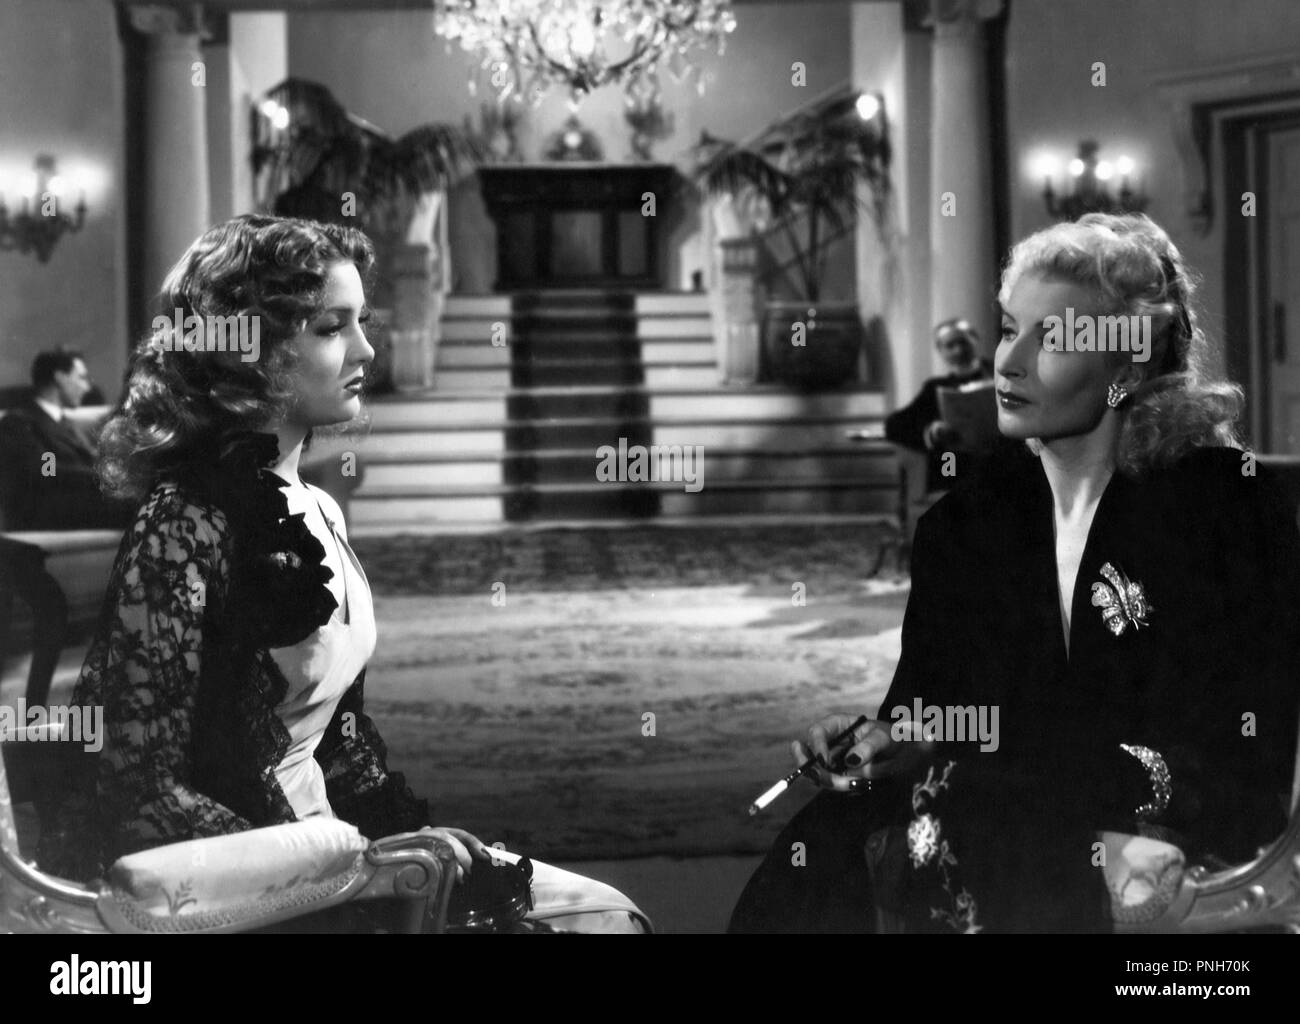 Original film title: SE LE FUE EL NOVIO. English title: SE LE FUE EL NOVIO. Year: 1945. Director: JULIO SALVADOR. Stars: SARA MONTIEL. Stock Photo